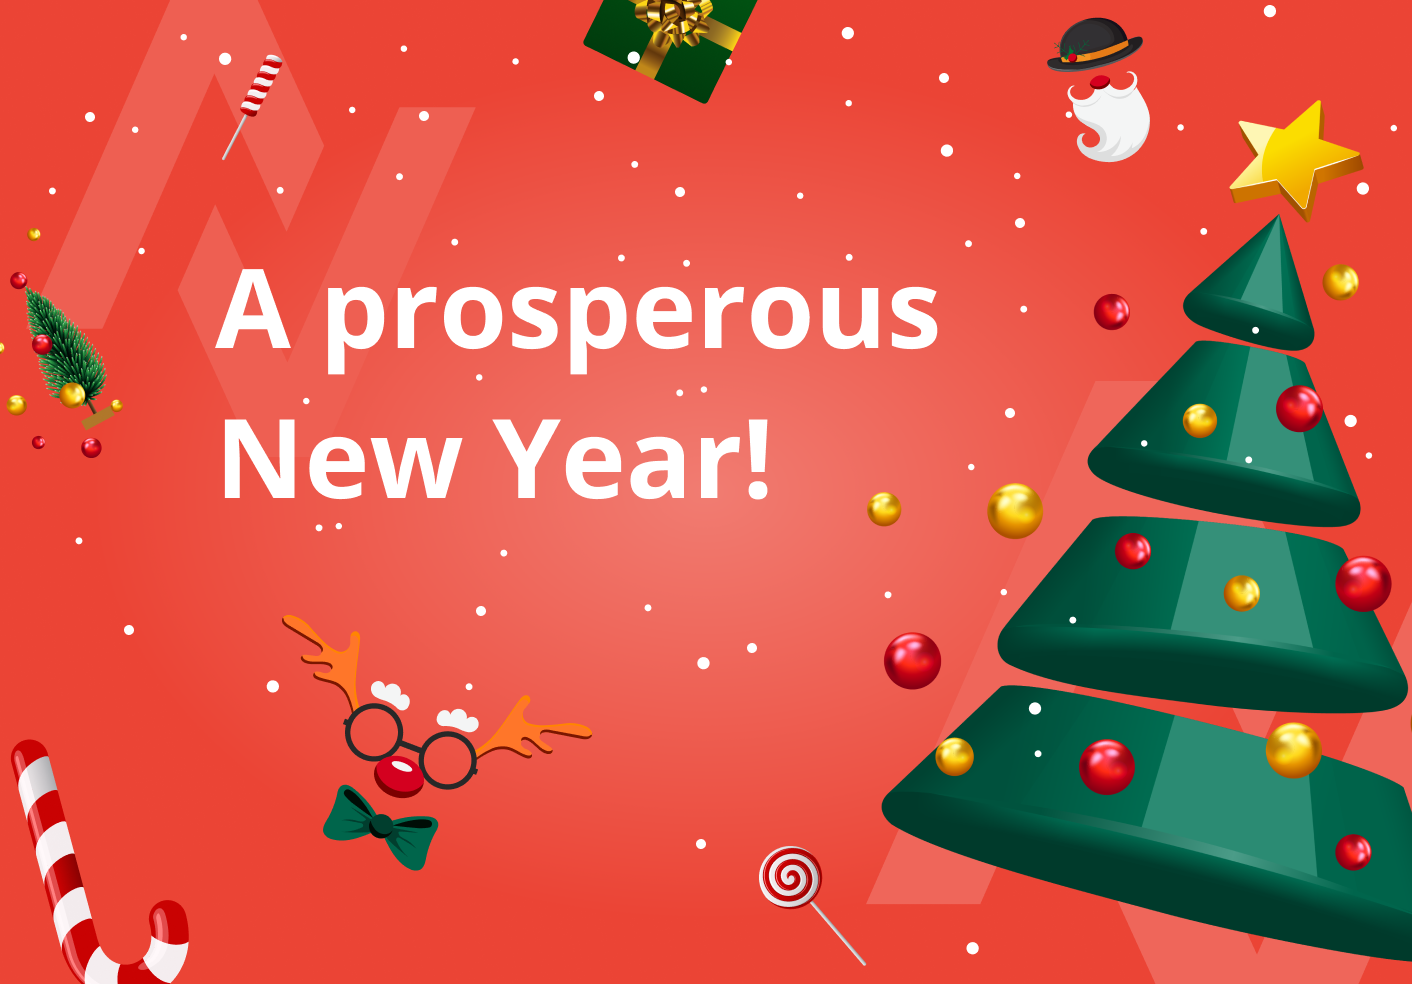 A prosperous New Year!